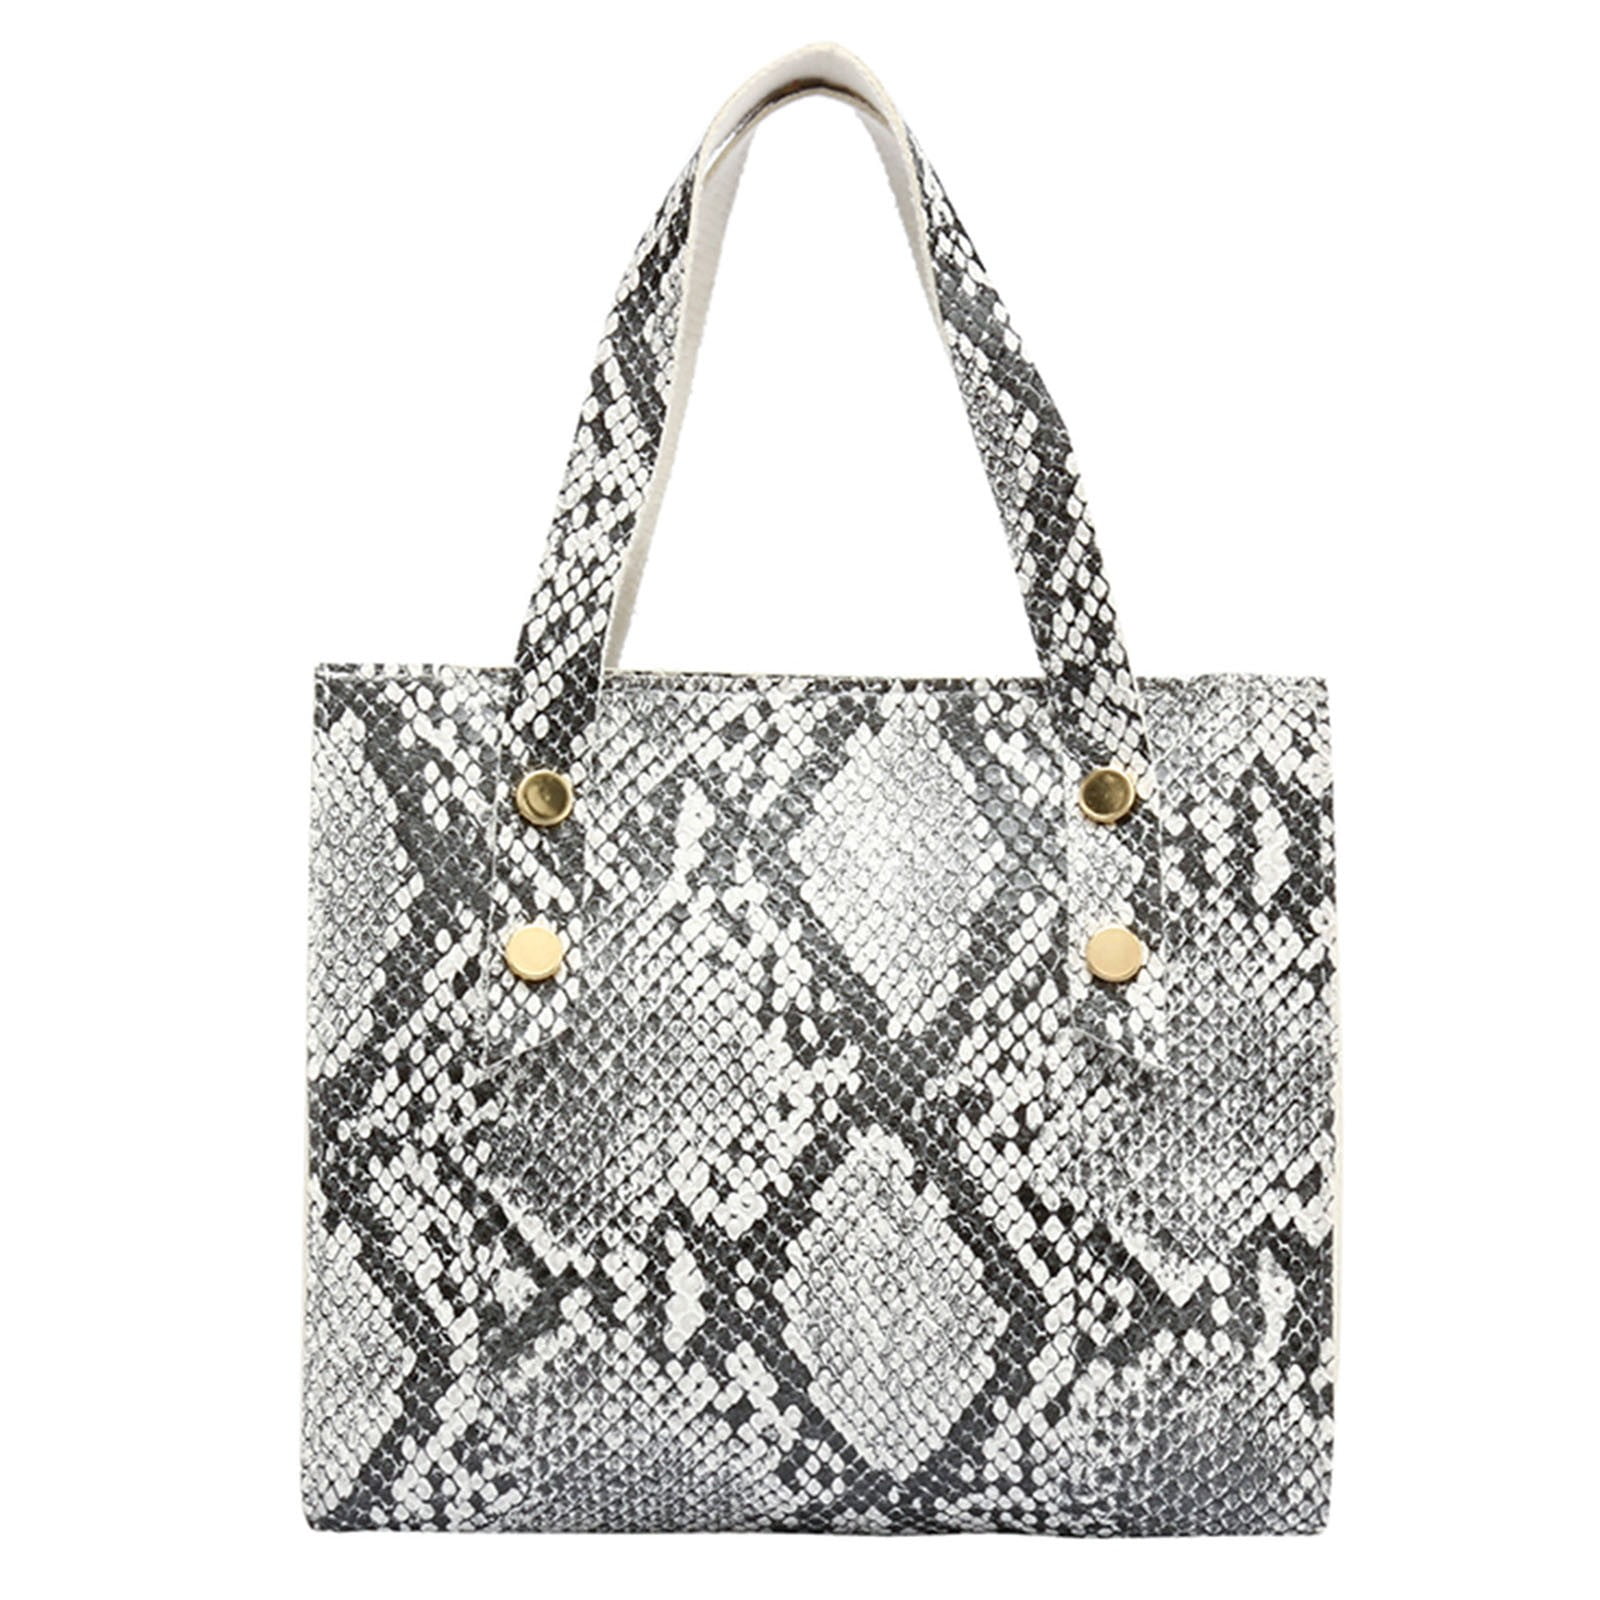 New Style Beautiful Bag for Women Fashion Ladies Bag - 2 Zipper